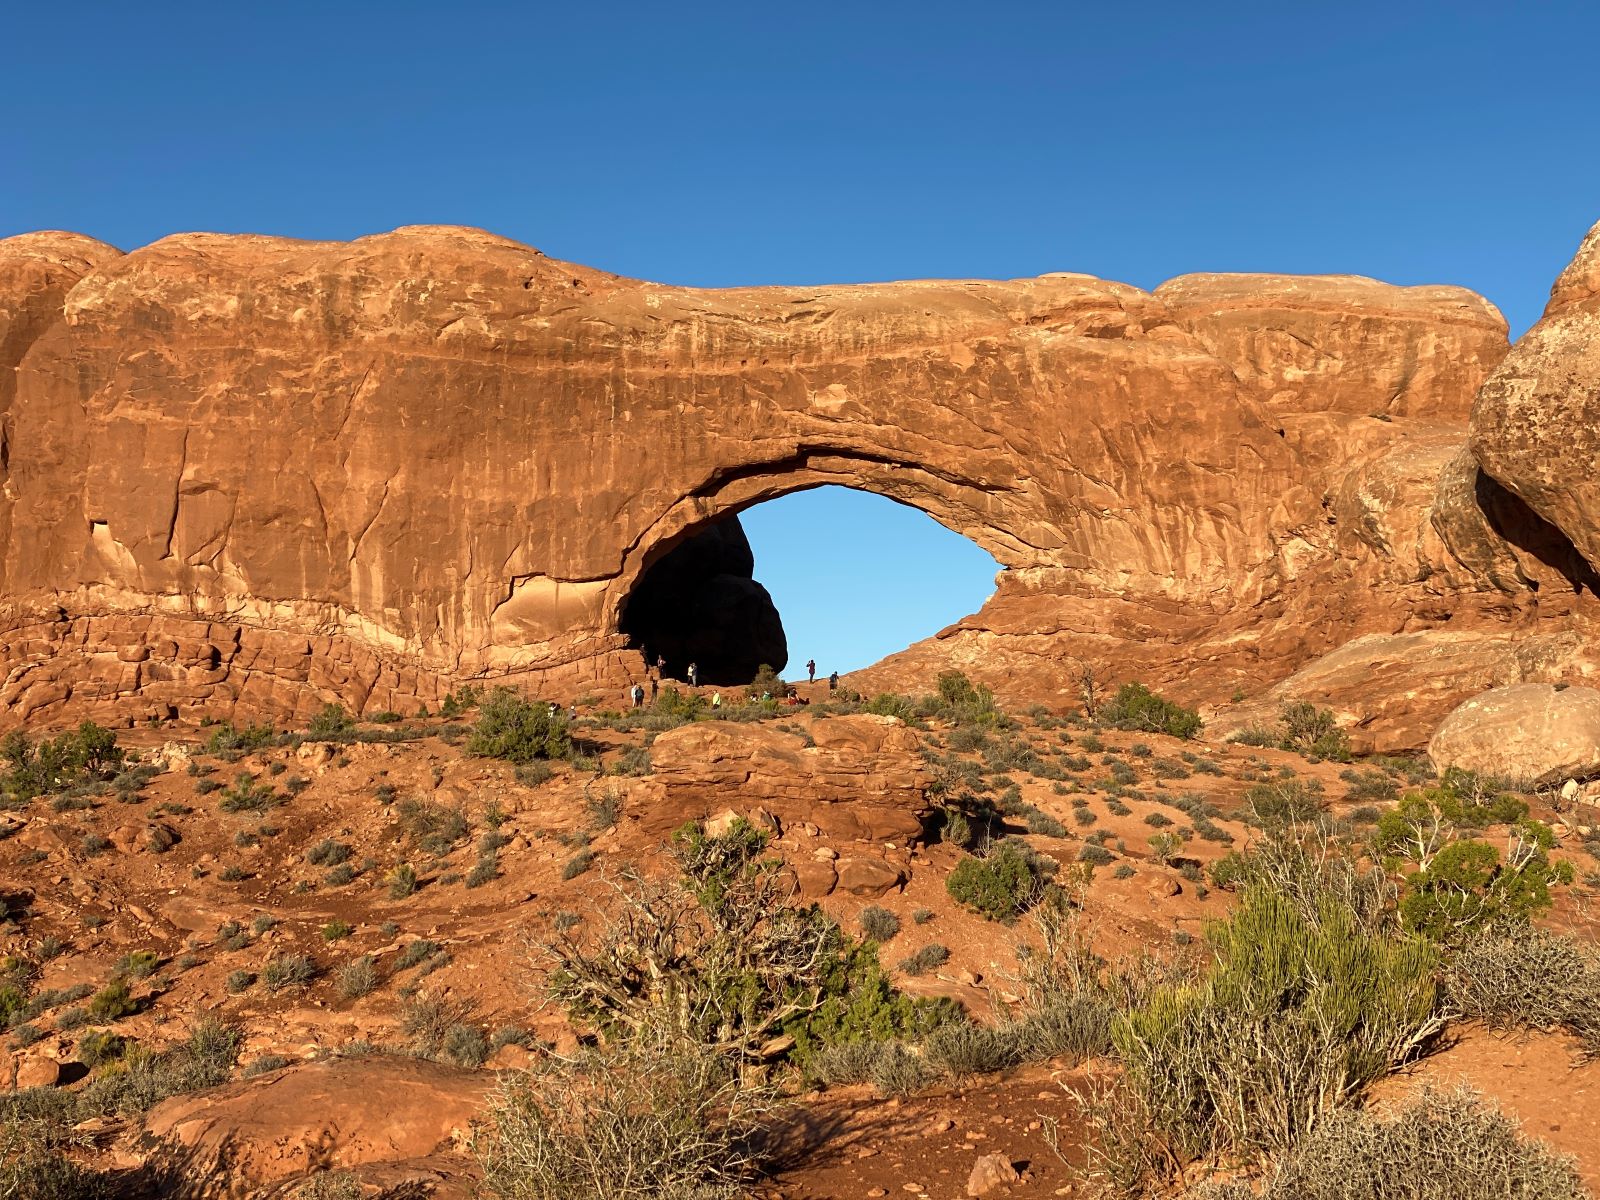 The Windows. Arches National Park. Credit: Carolina Valenzuela